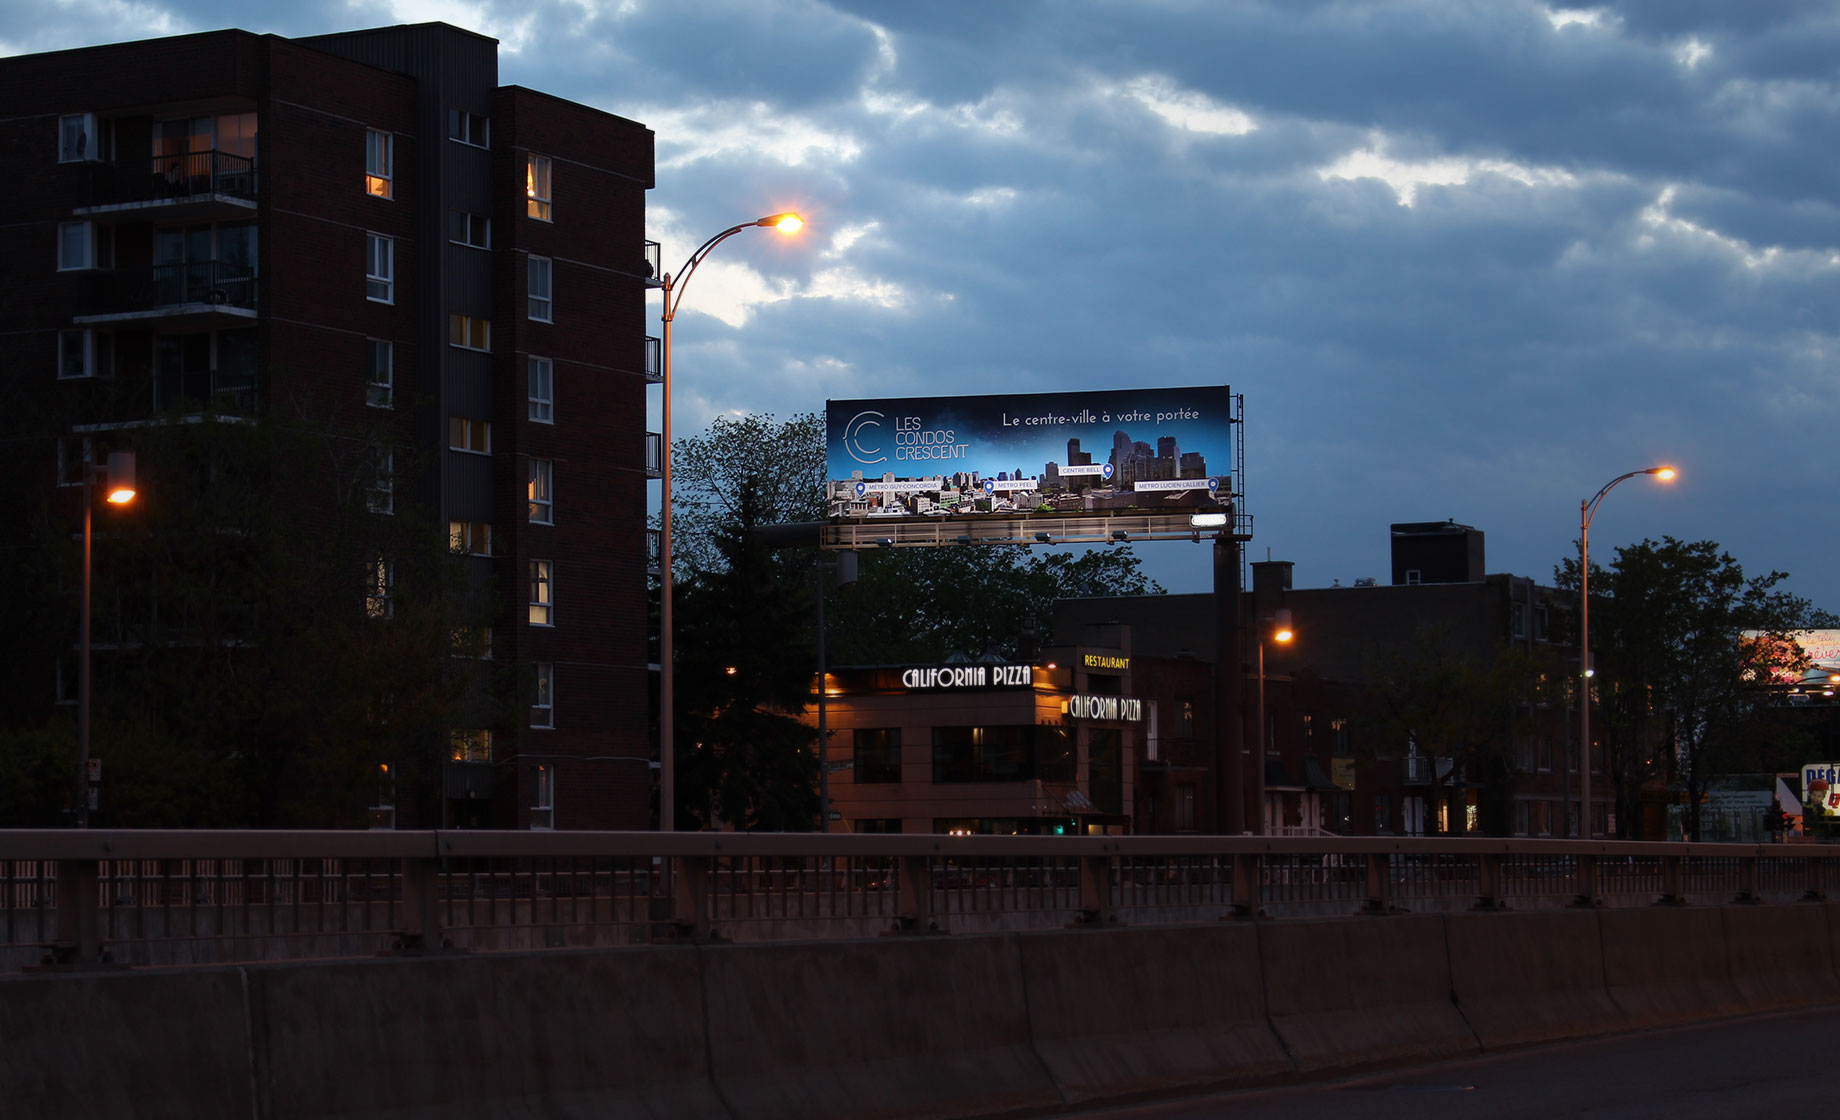 Les Condos Crescent Super-Board Billboard Advertisement by Webmovement